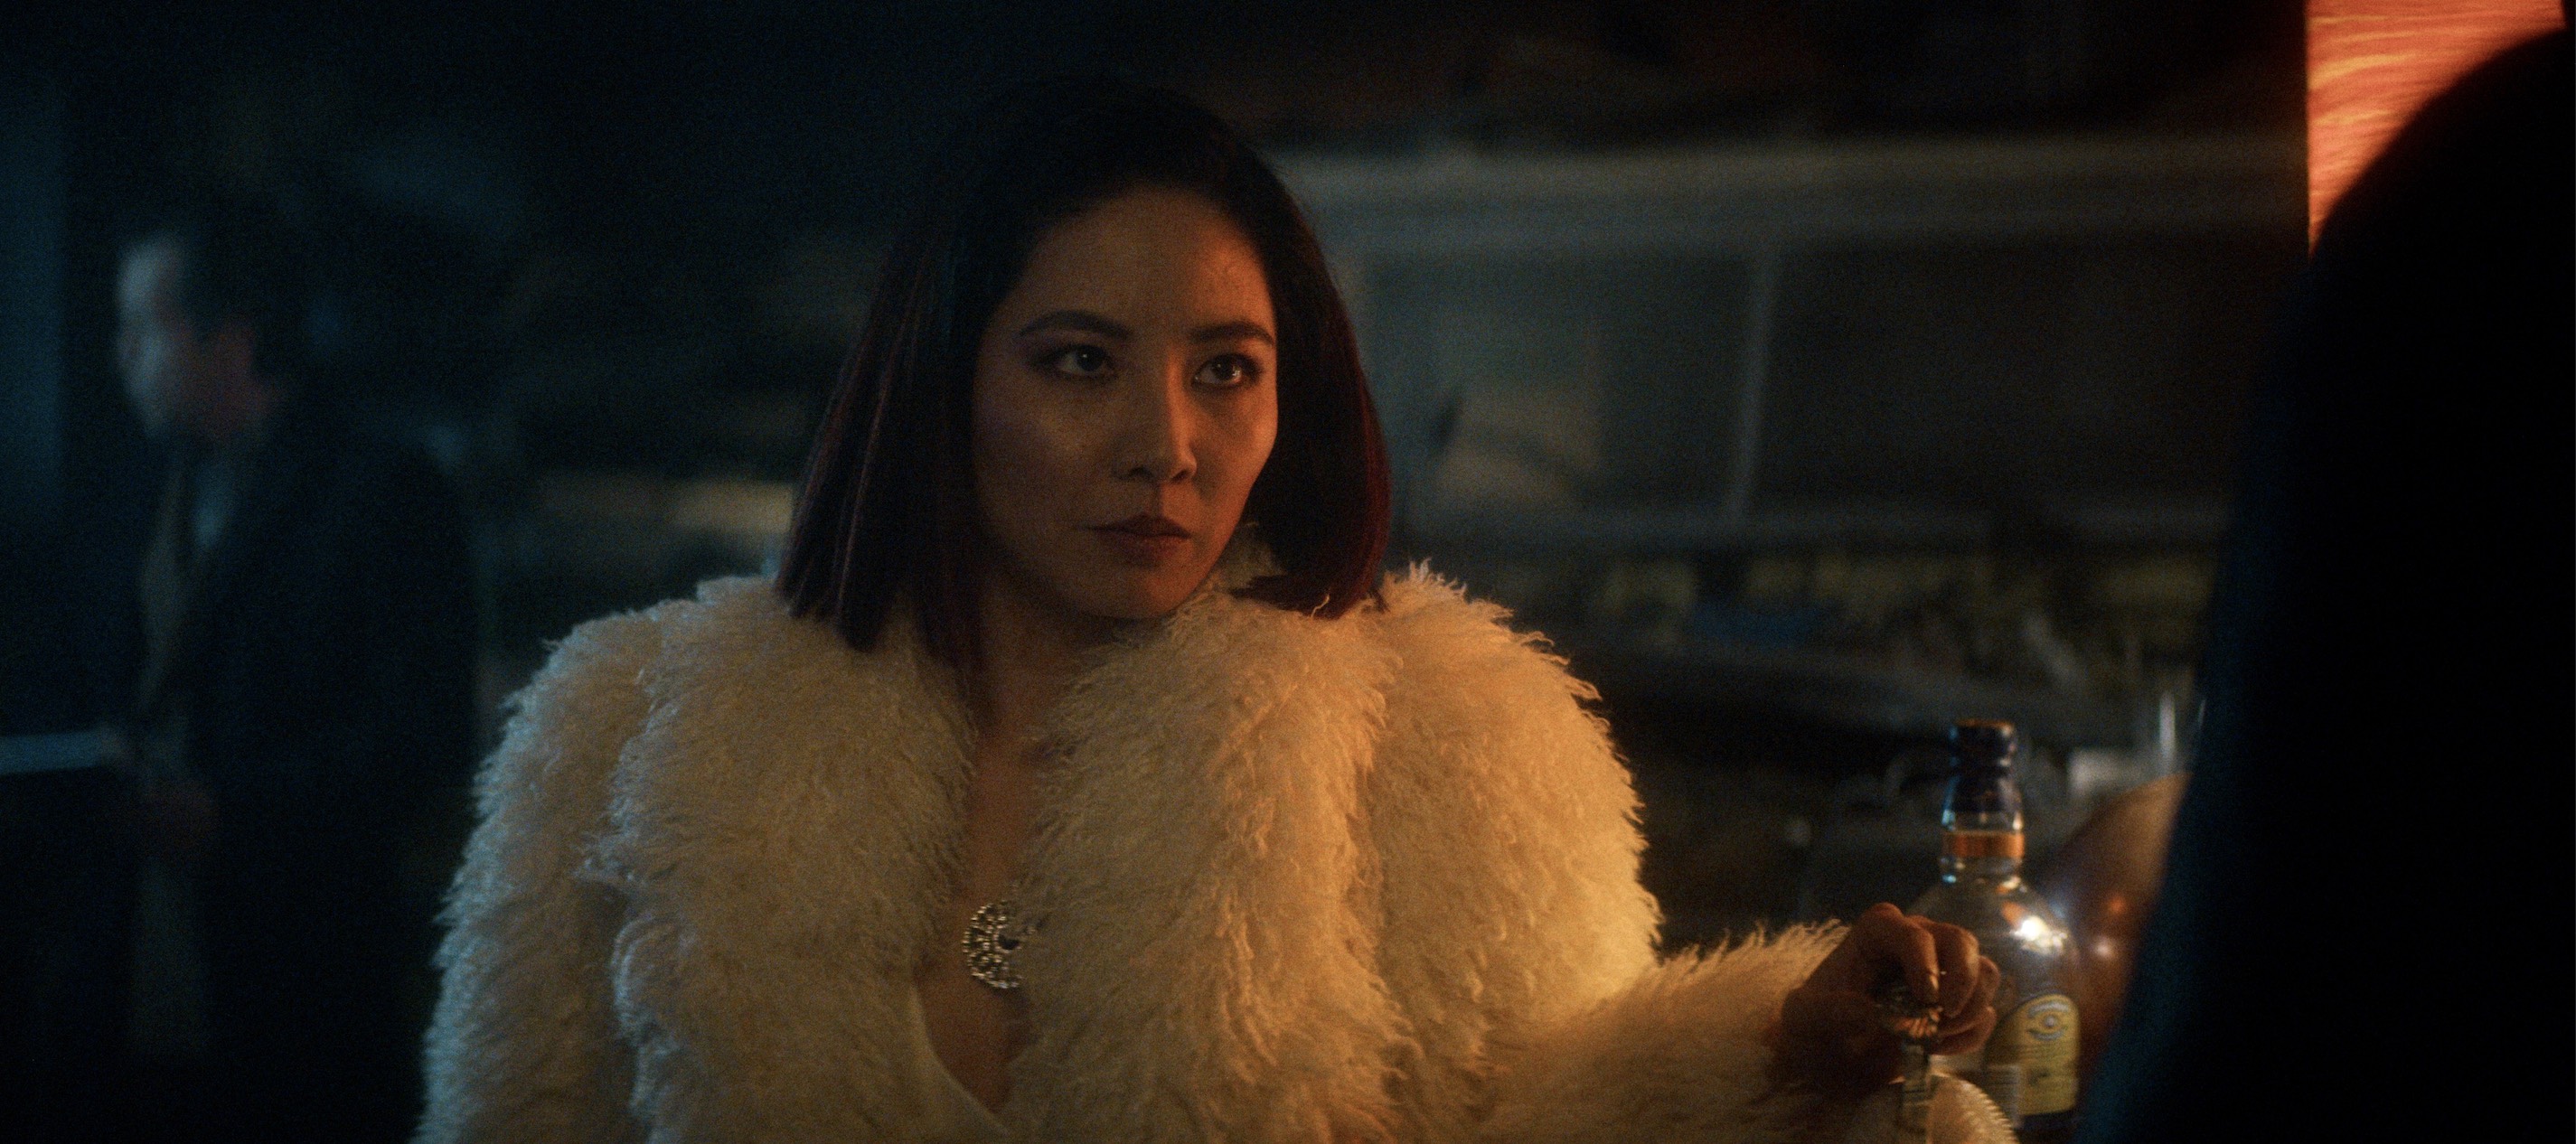 Heart of Stone Cast on Netflix - Jing Lusi as Yang